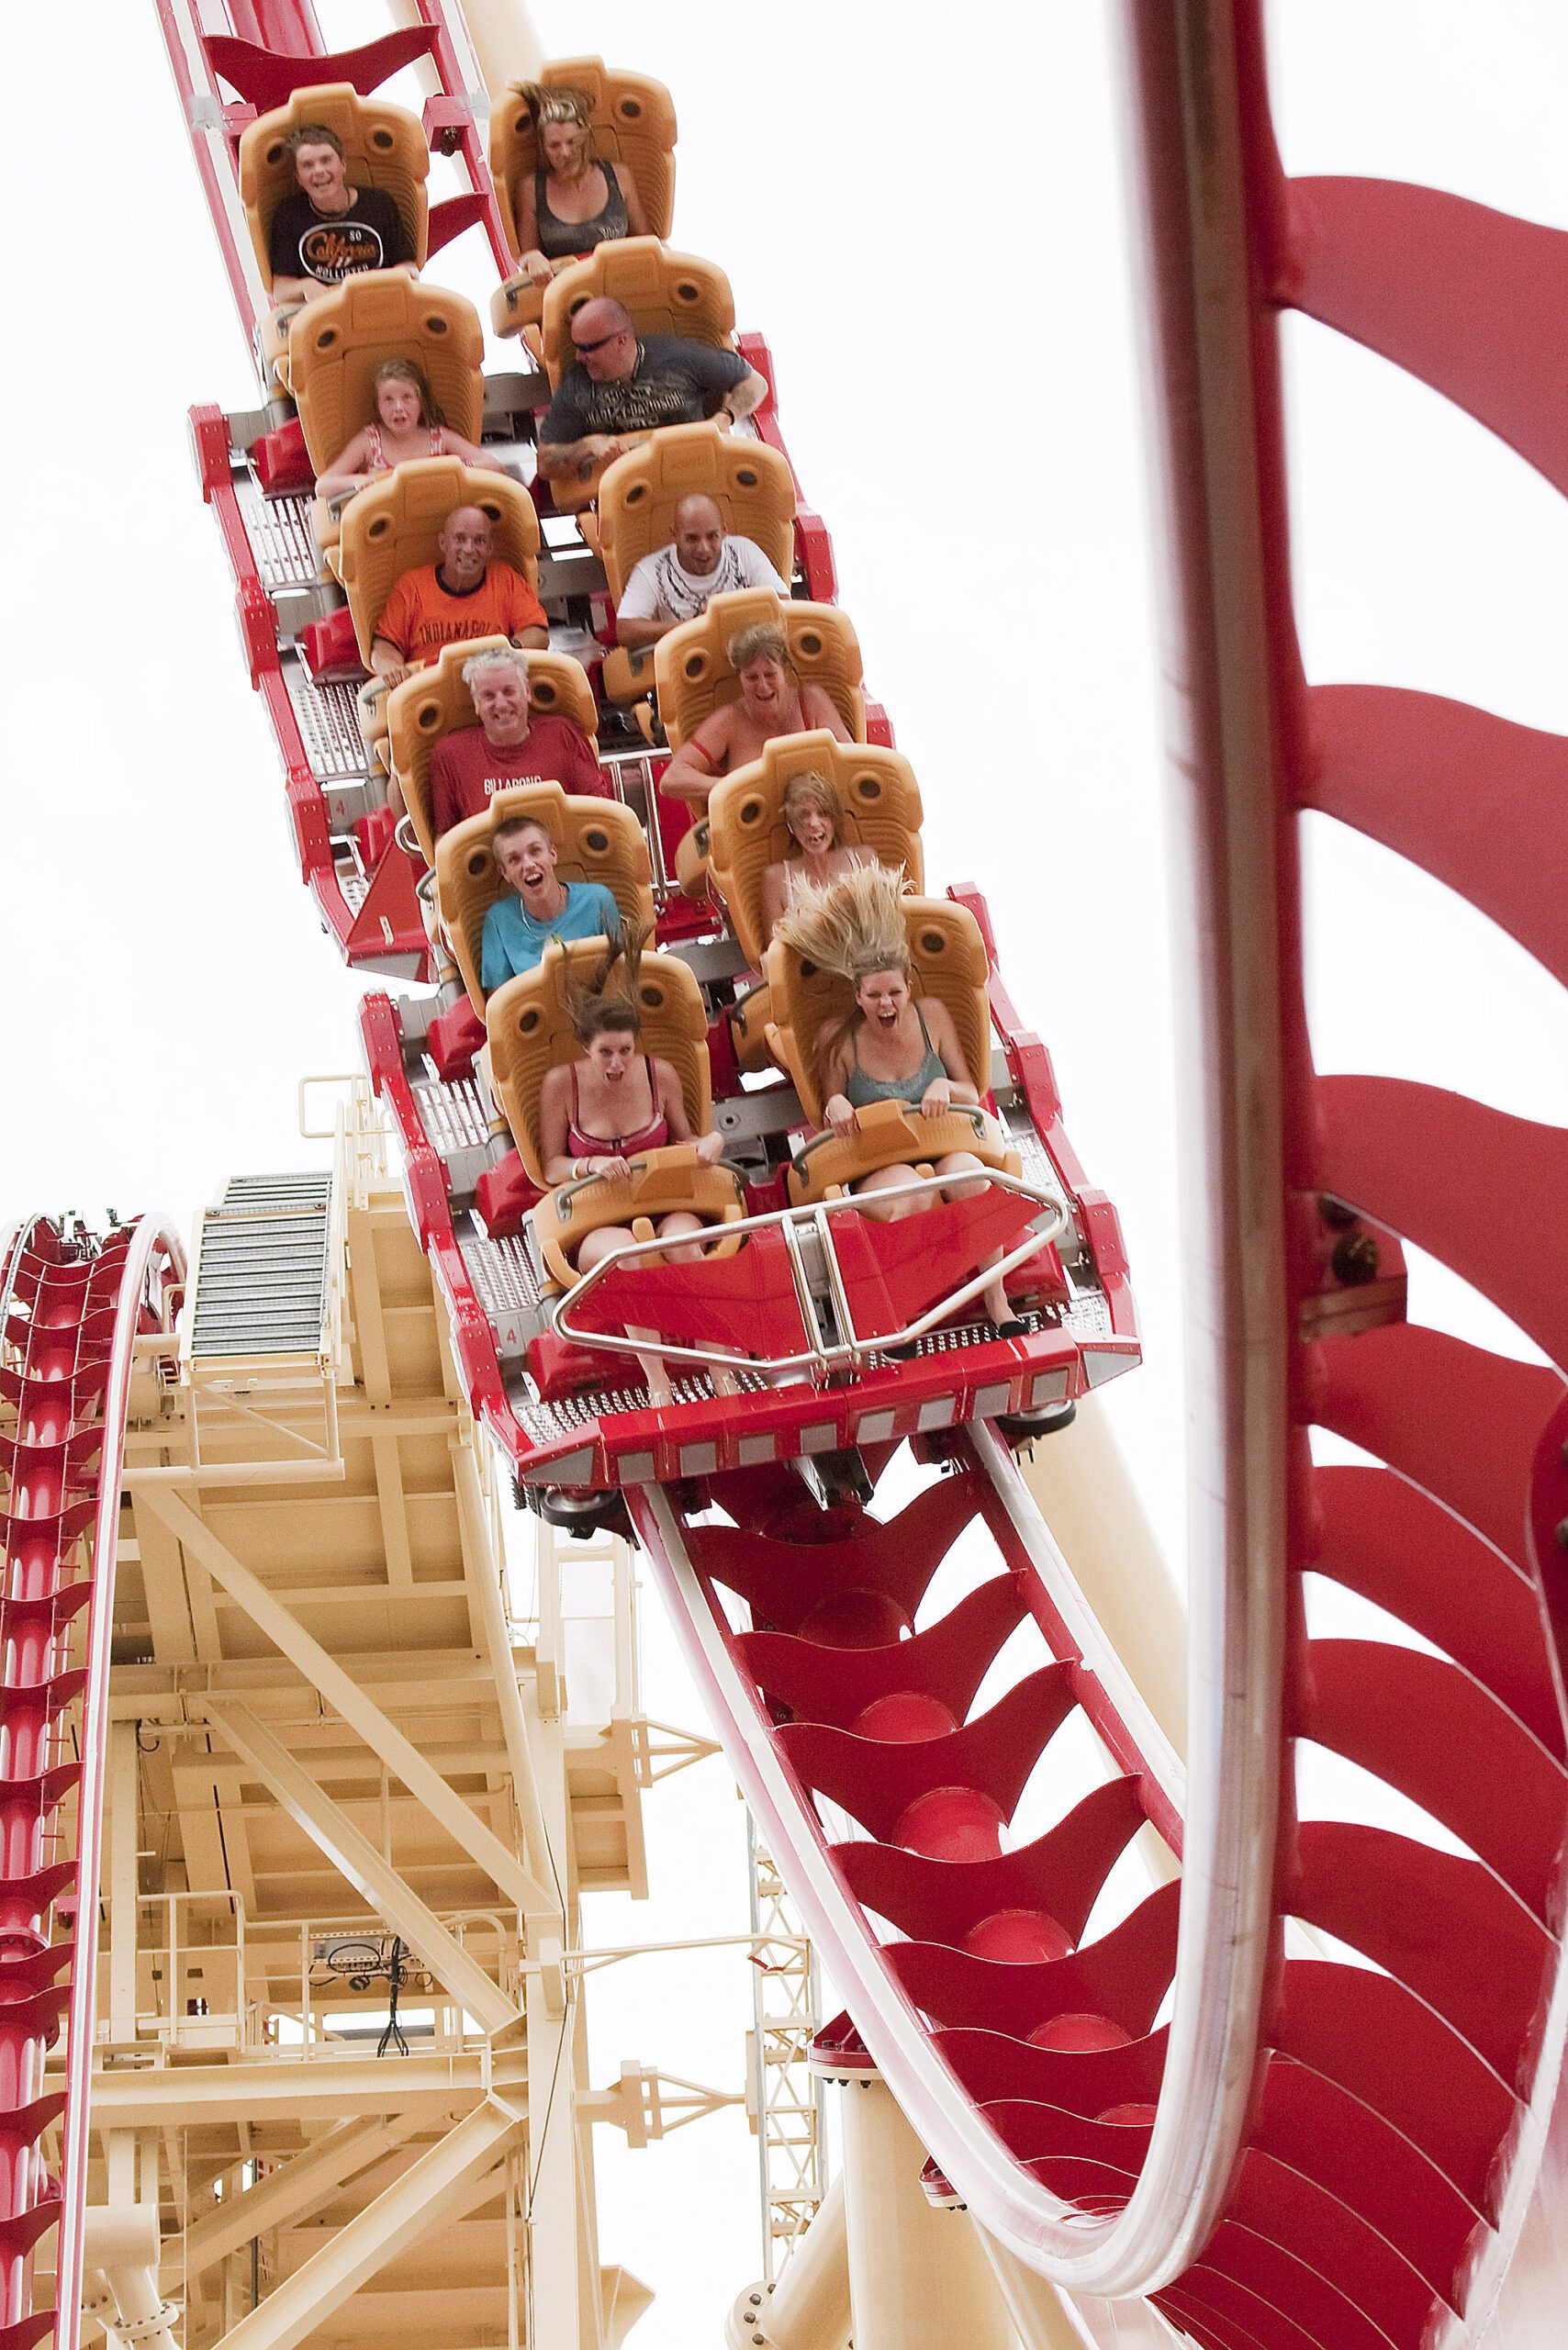 Brave Universal’s Hollywood Rip Ride Rockit roller coaster. (Photo: Courtesy of Universal Studios Orlando)